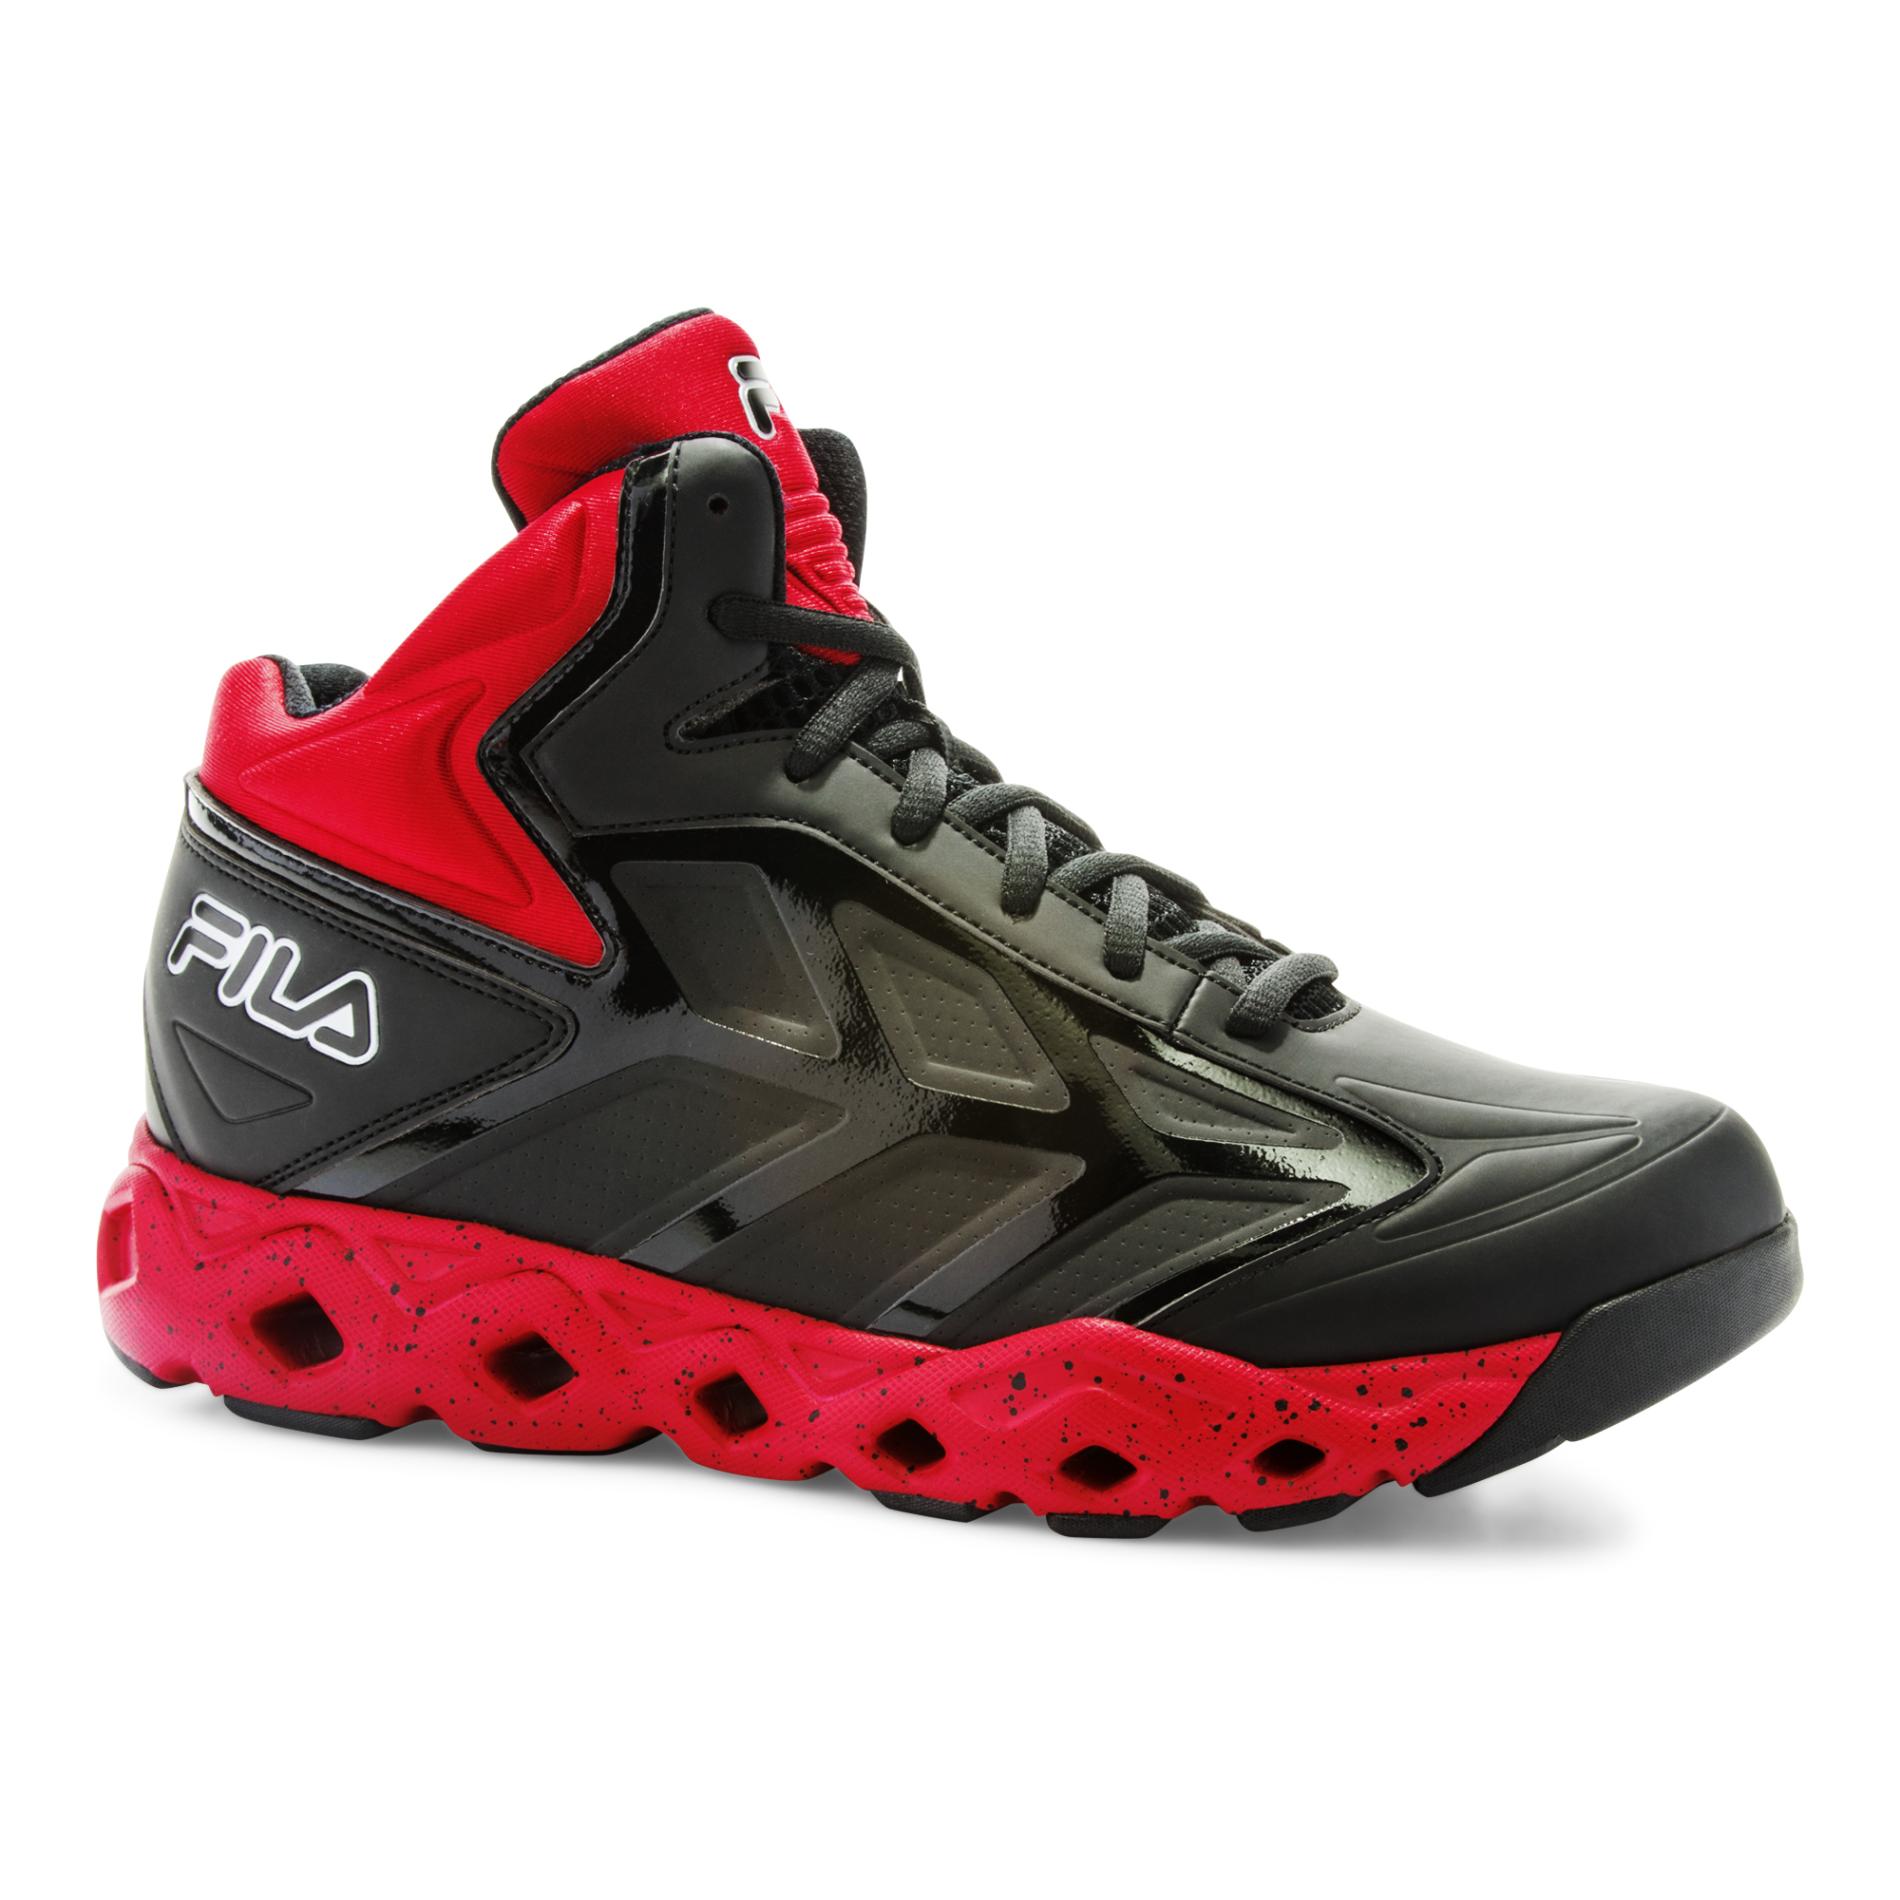 Fila Men's Torranado Athletic Shoe - Black/Red